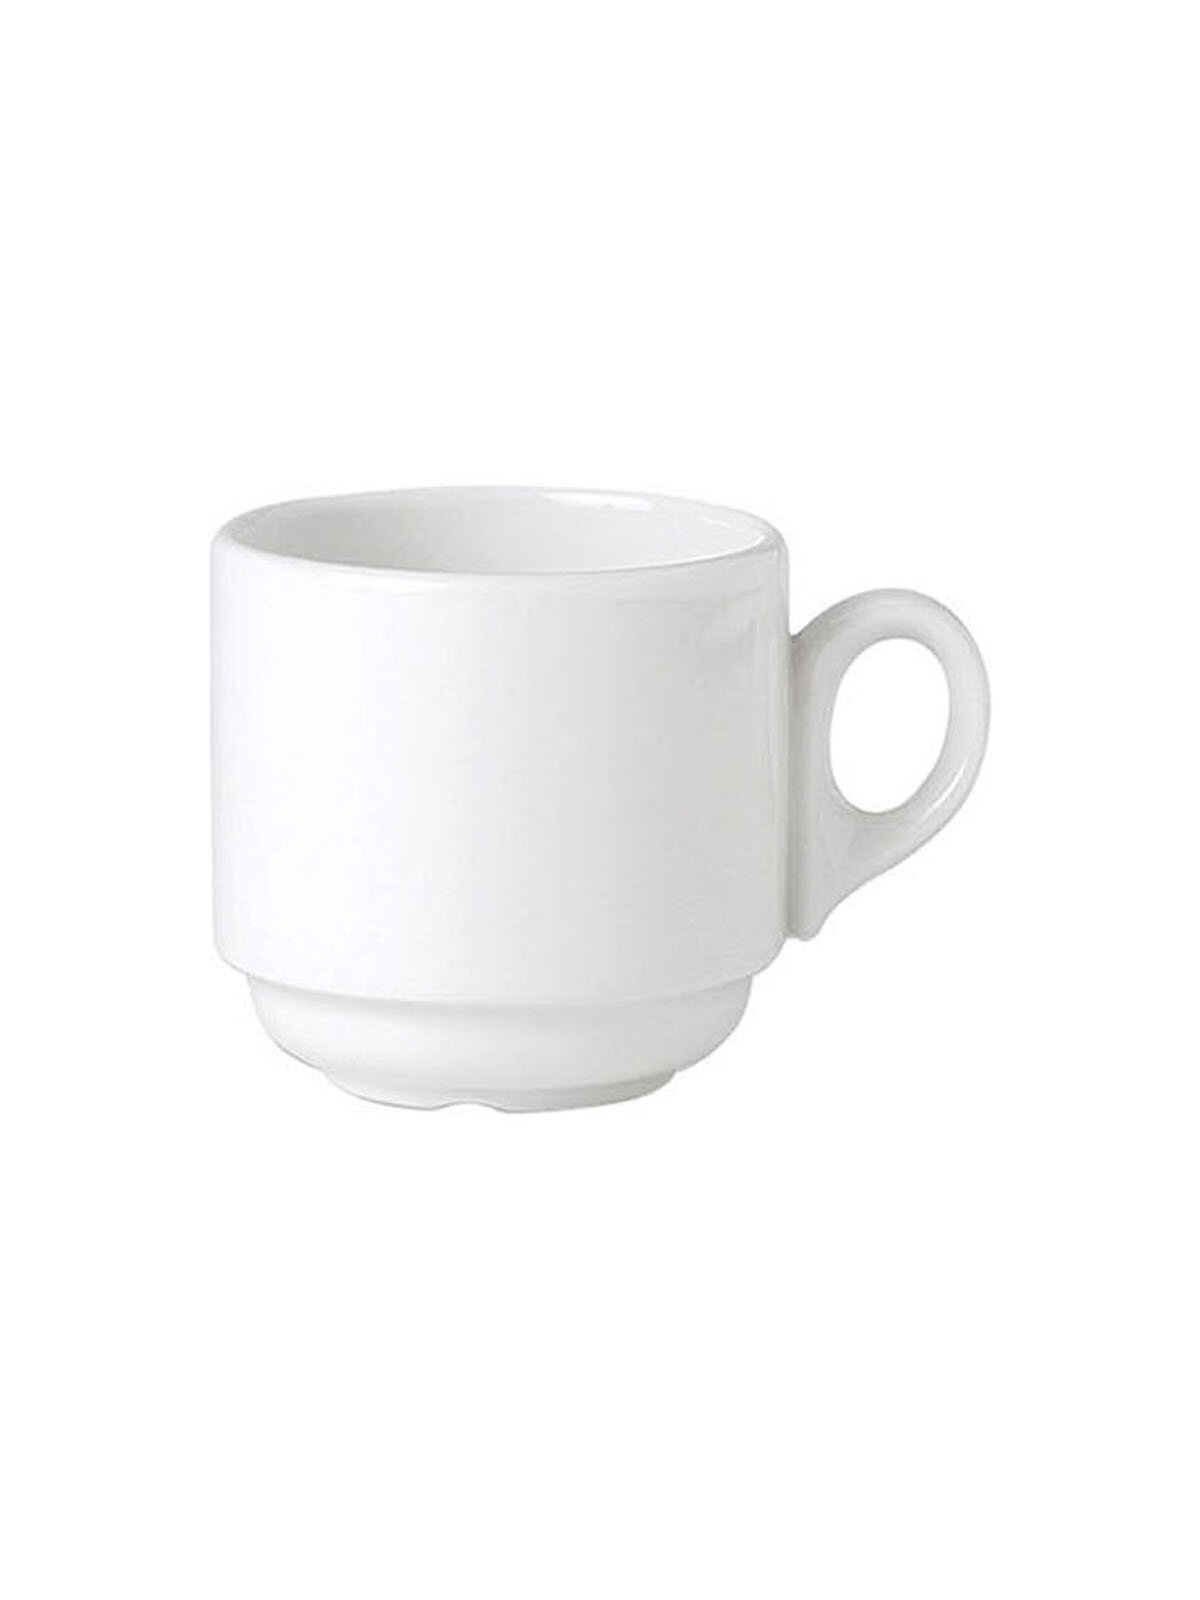 Чашки чайные набор 6 шт Steelite Simpl White, фарфоровые, 170 мл